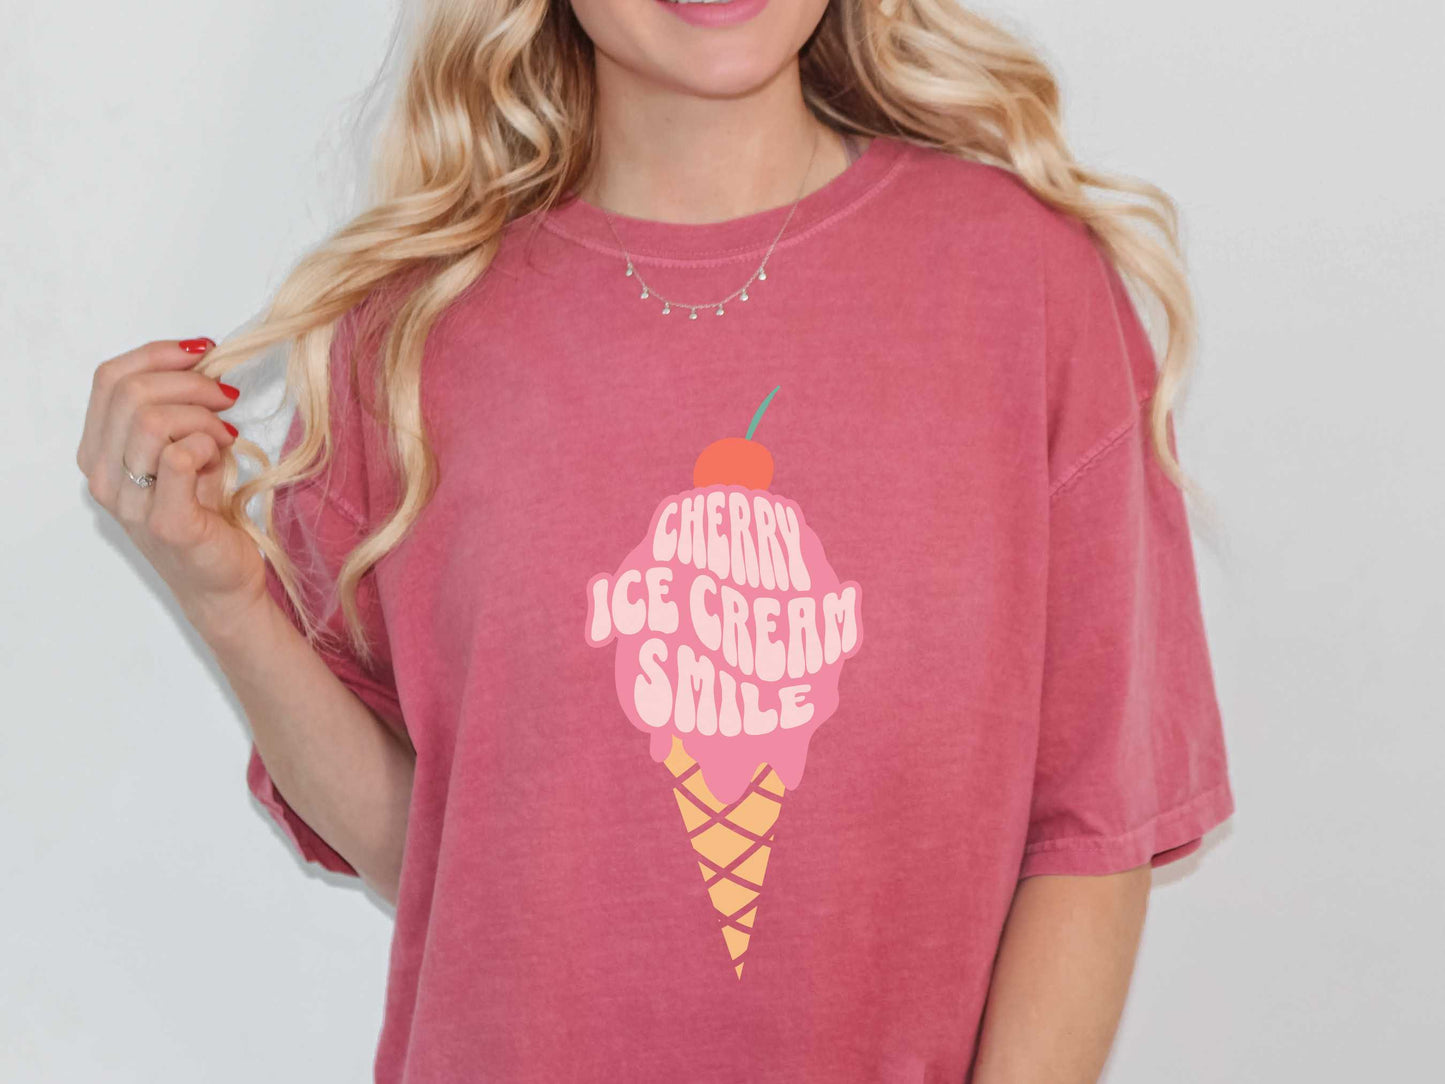 Duran Duran Rio "Cherry Ice Cream Smile" T-Shirt